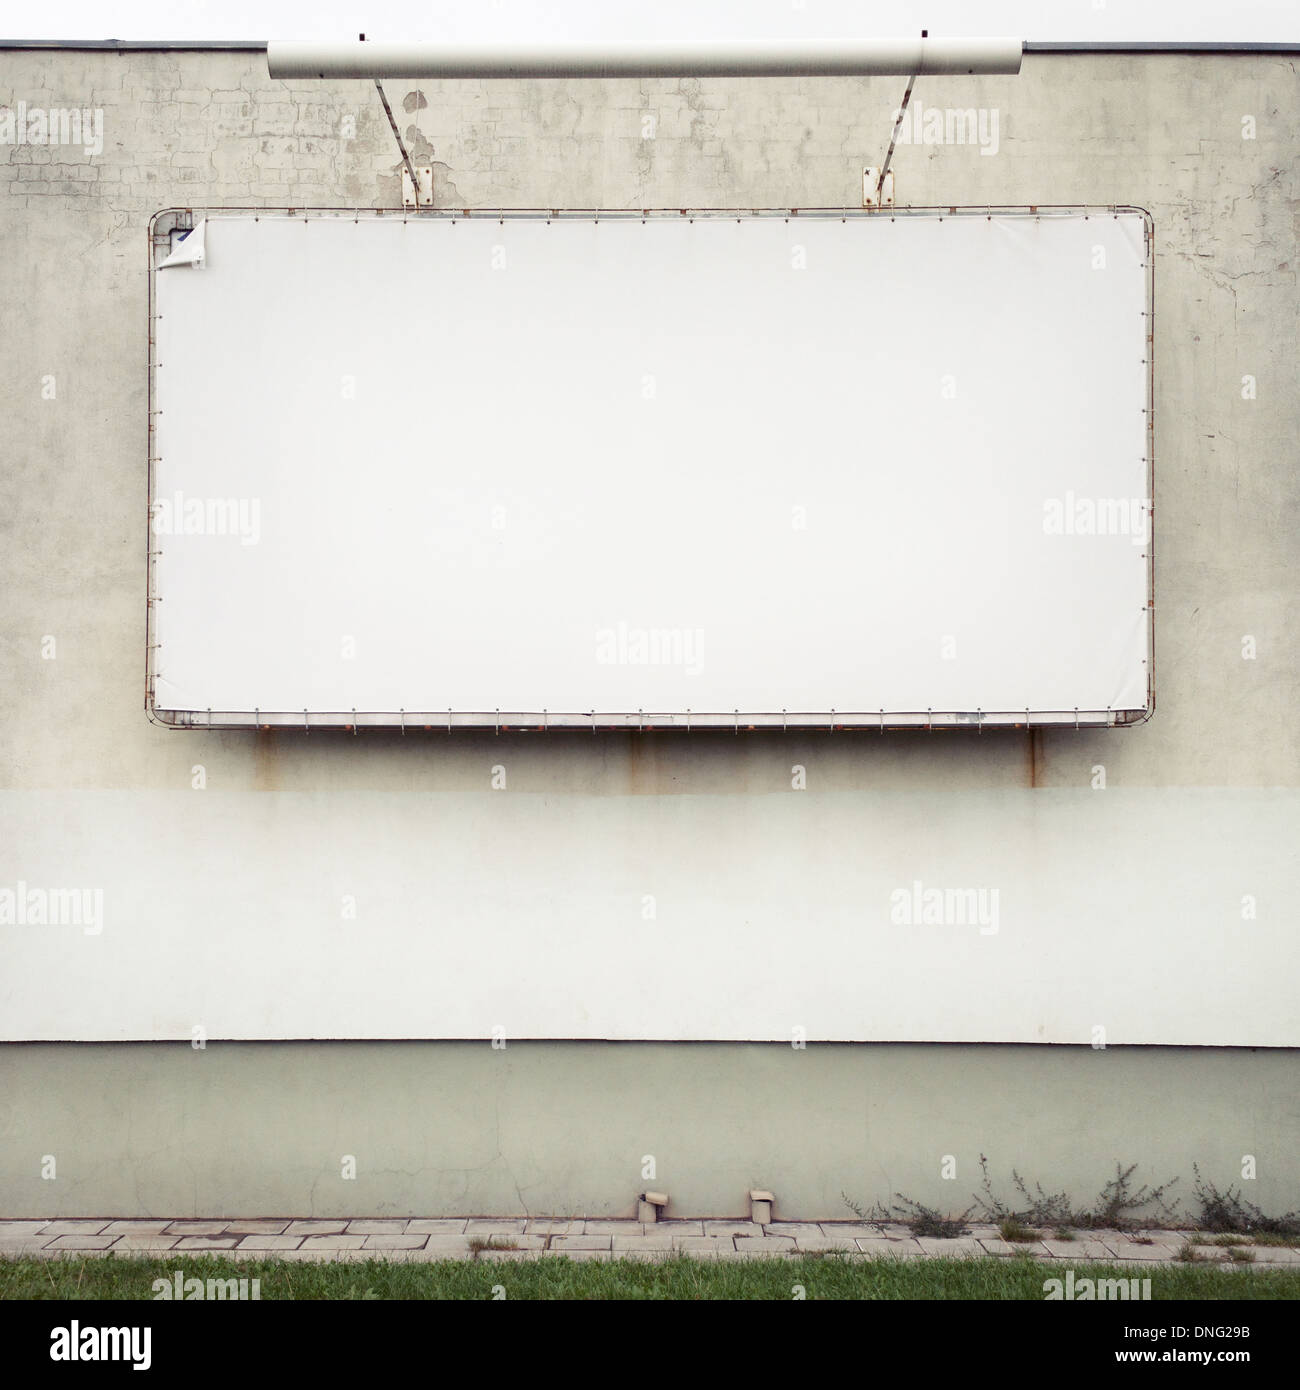 Blank advertising billboard on a street wall. Stock Photo